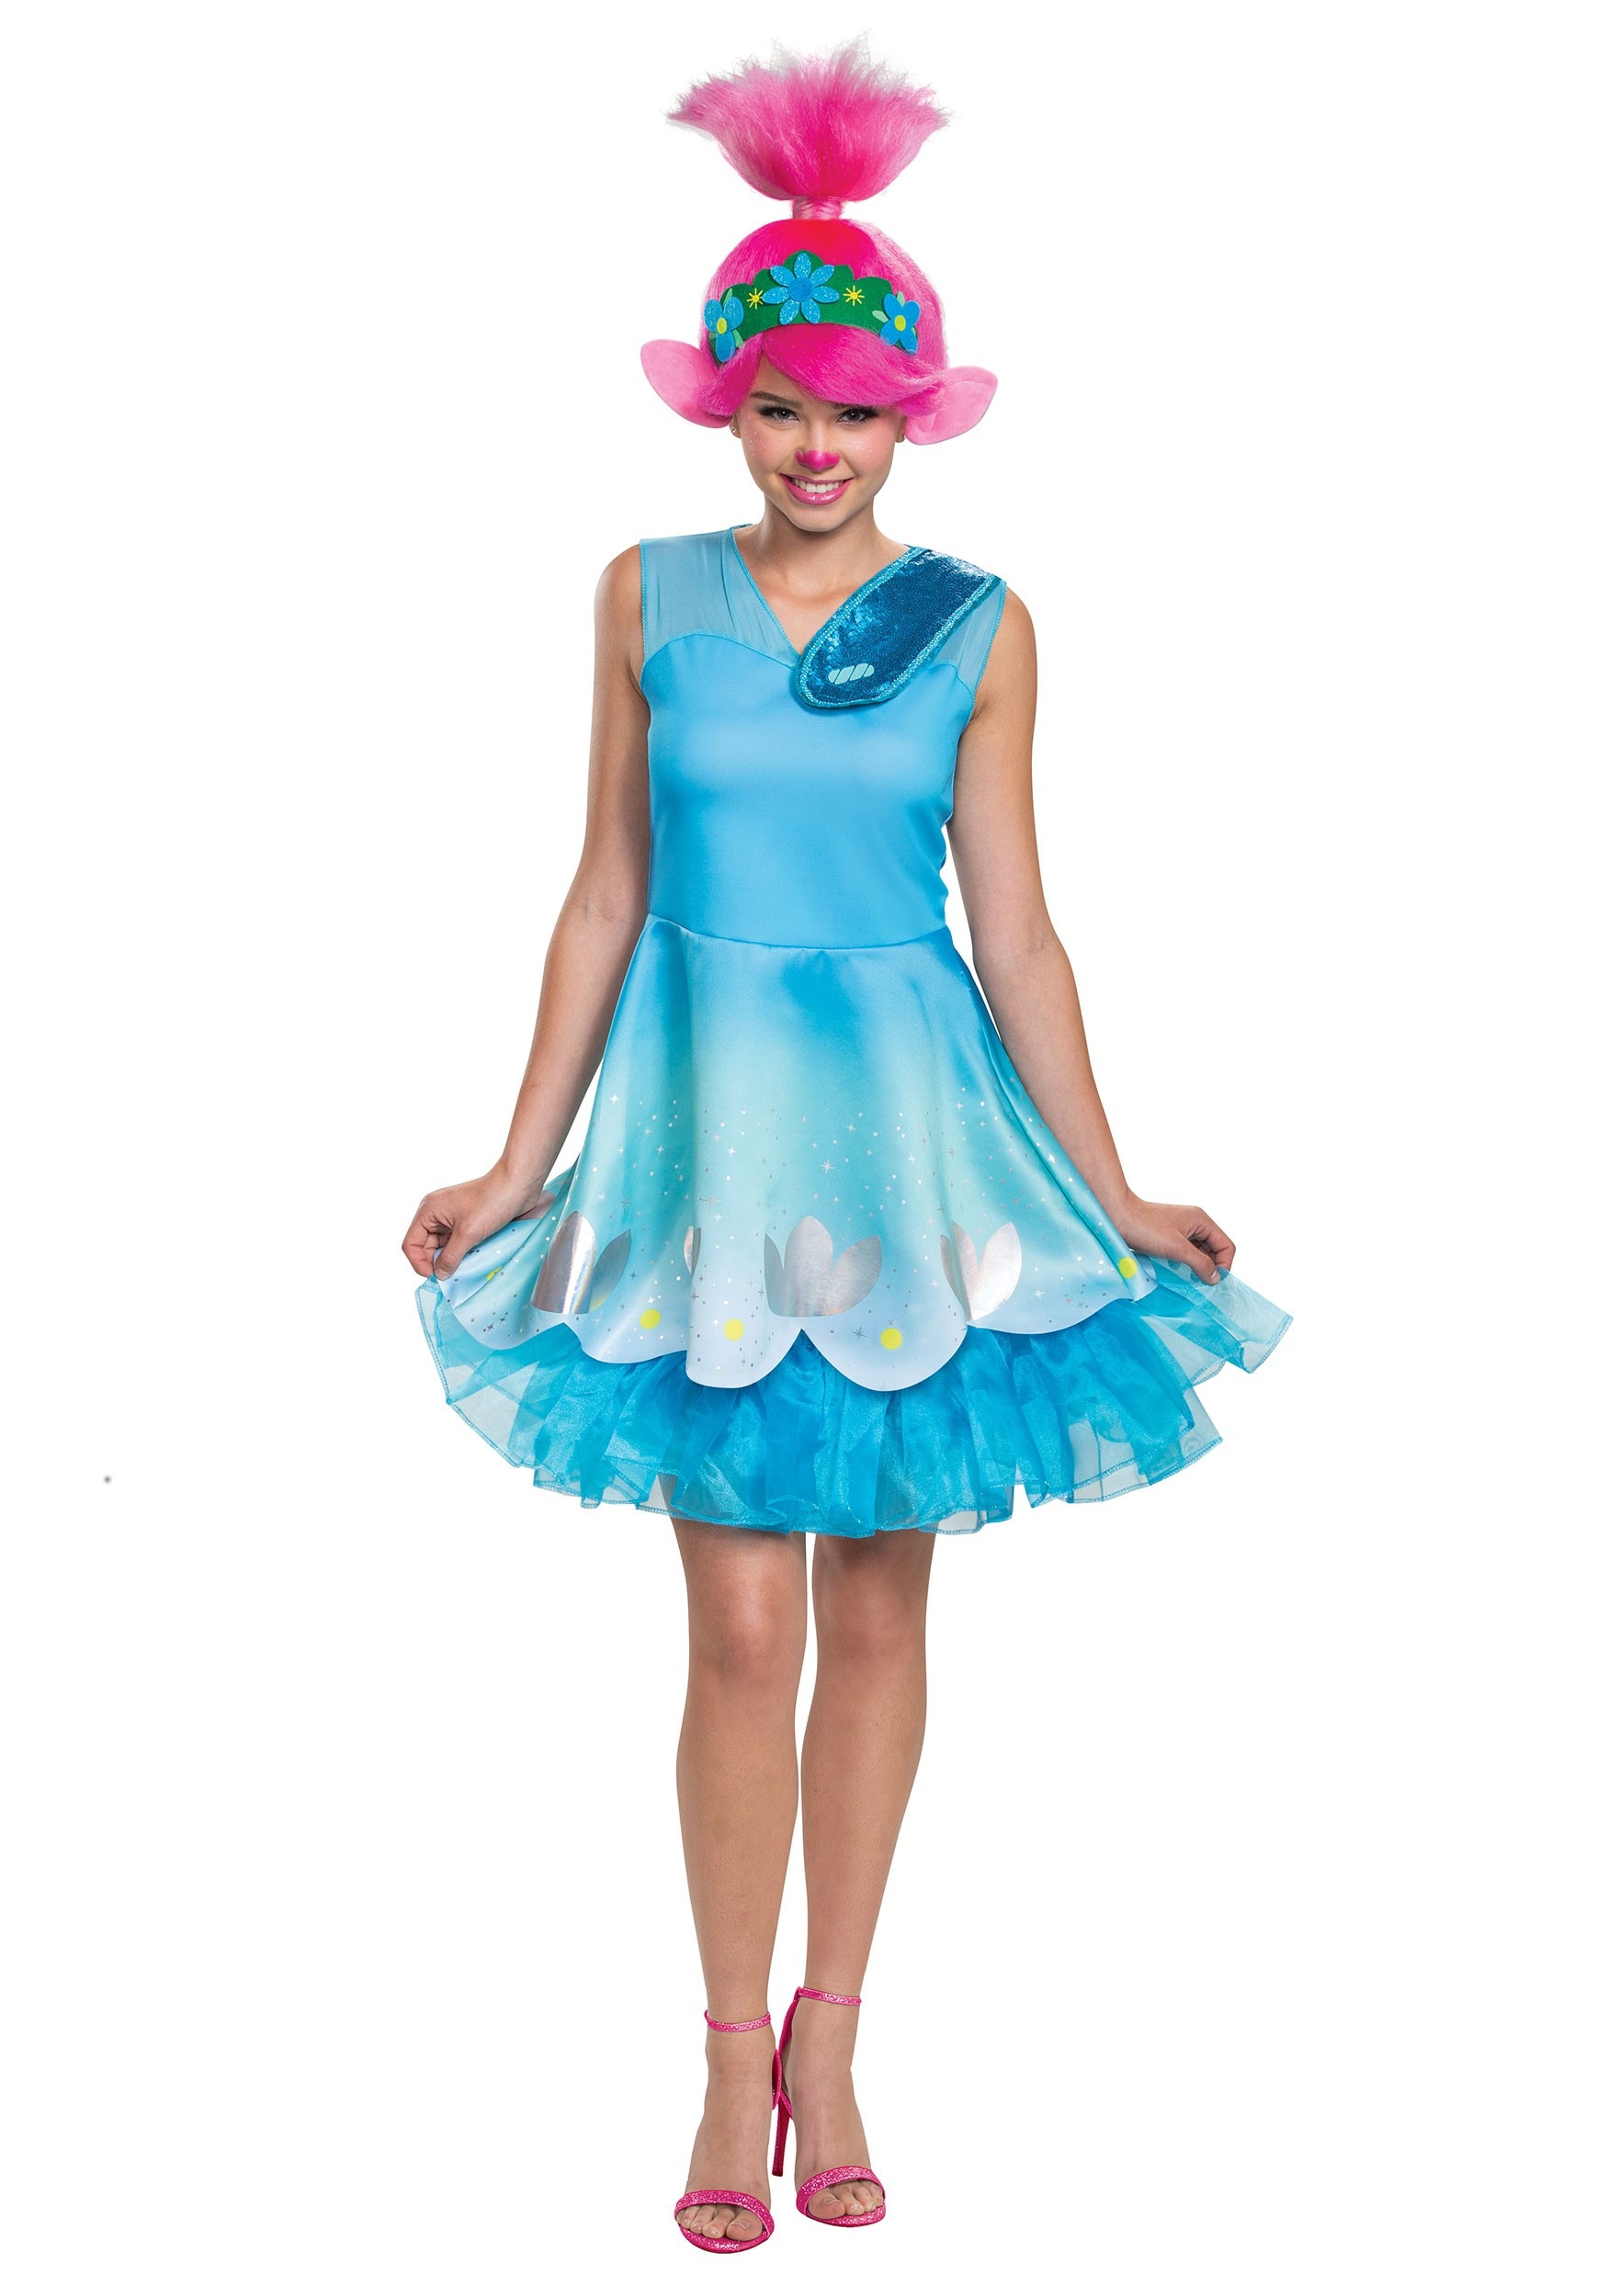 Cute Poppy Mascot Costume Trolls Princess Parade birthday Cosplay Dress Adult